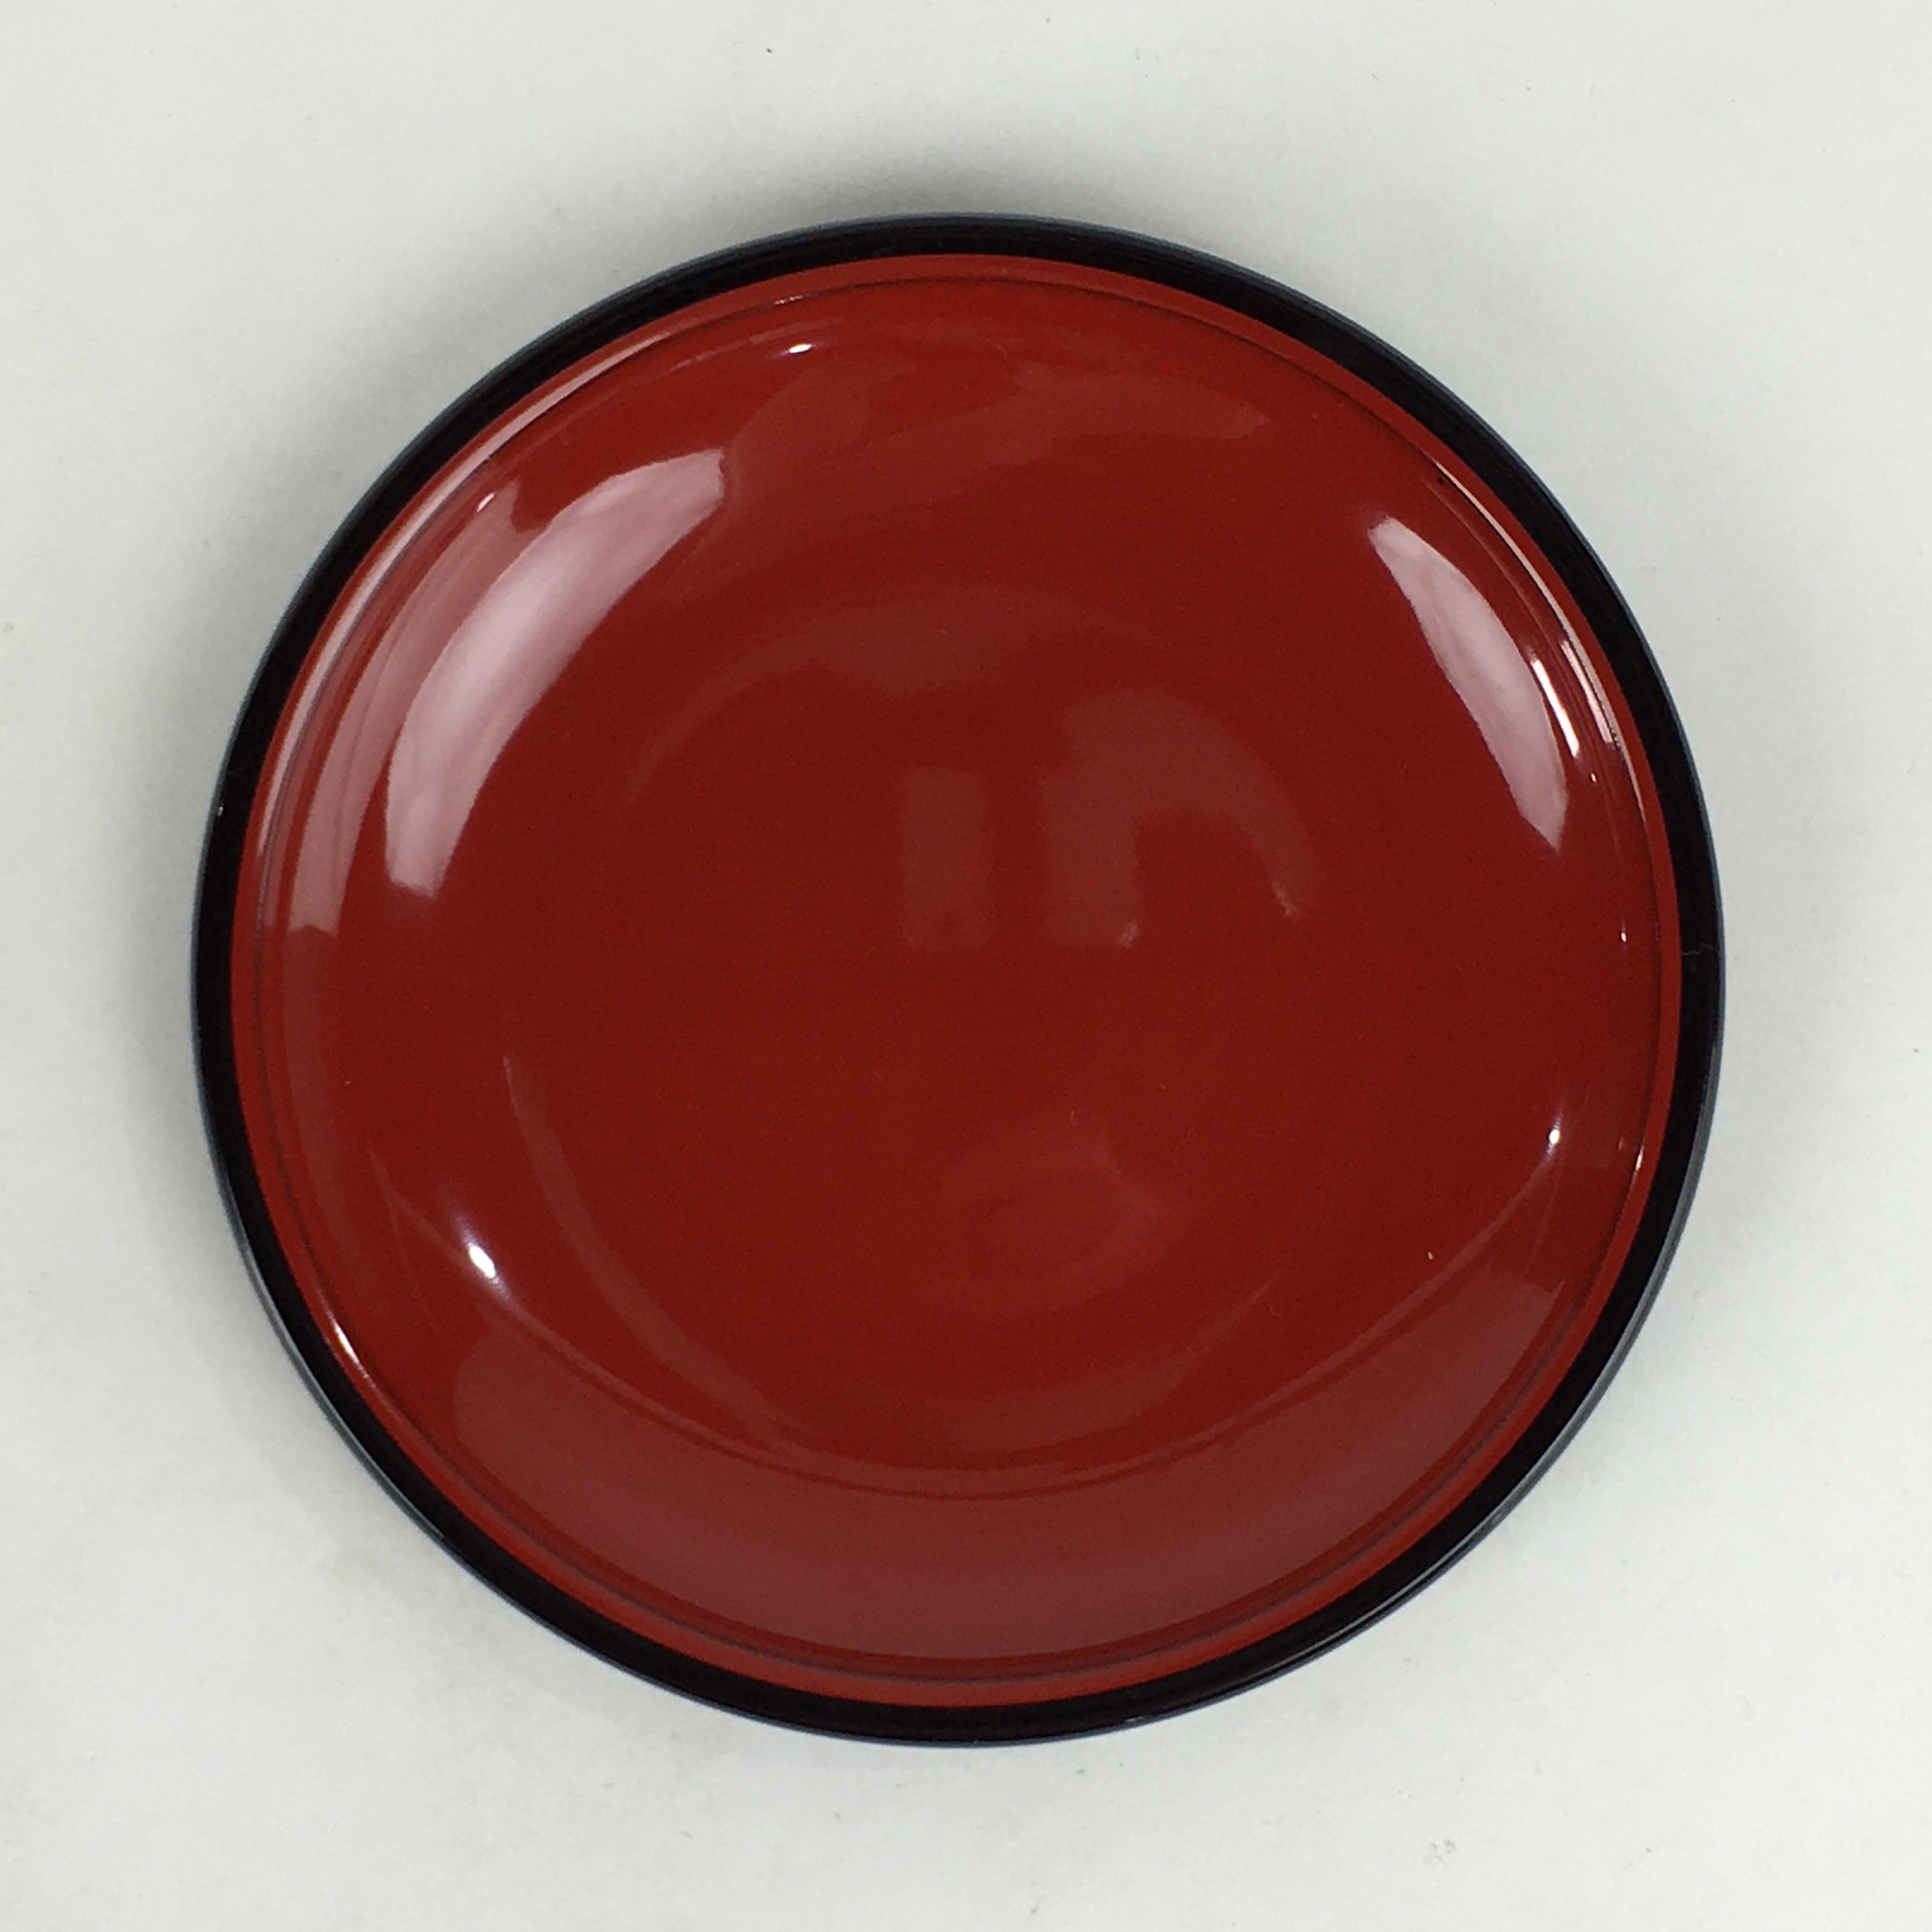 Japanese Wooden Lacquered Plate Vtg Round Red Black 16.3 cm UR697